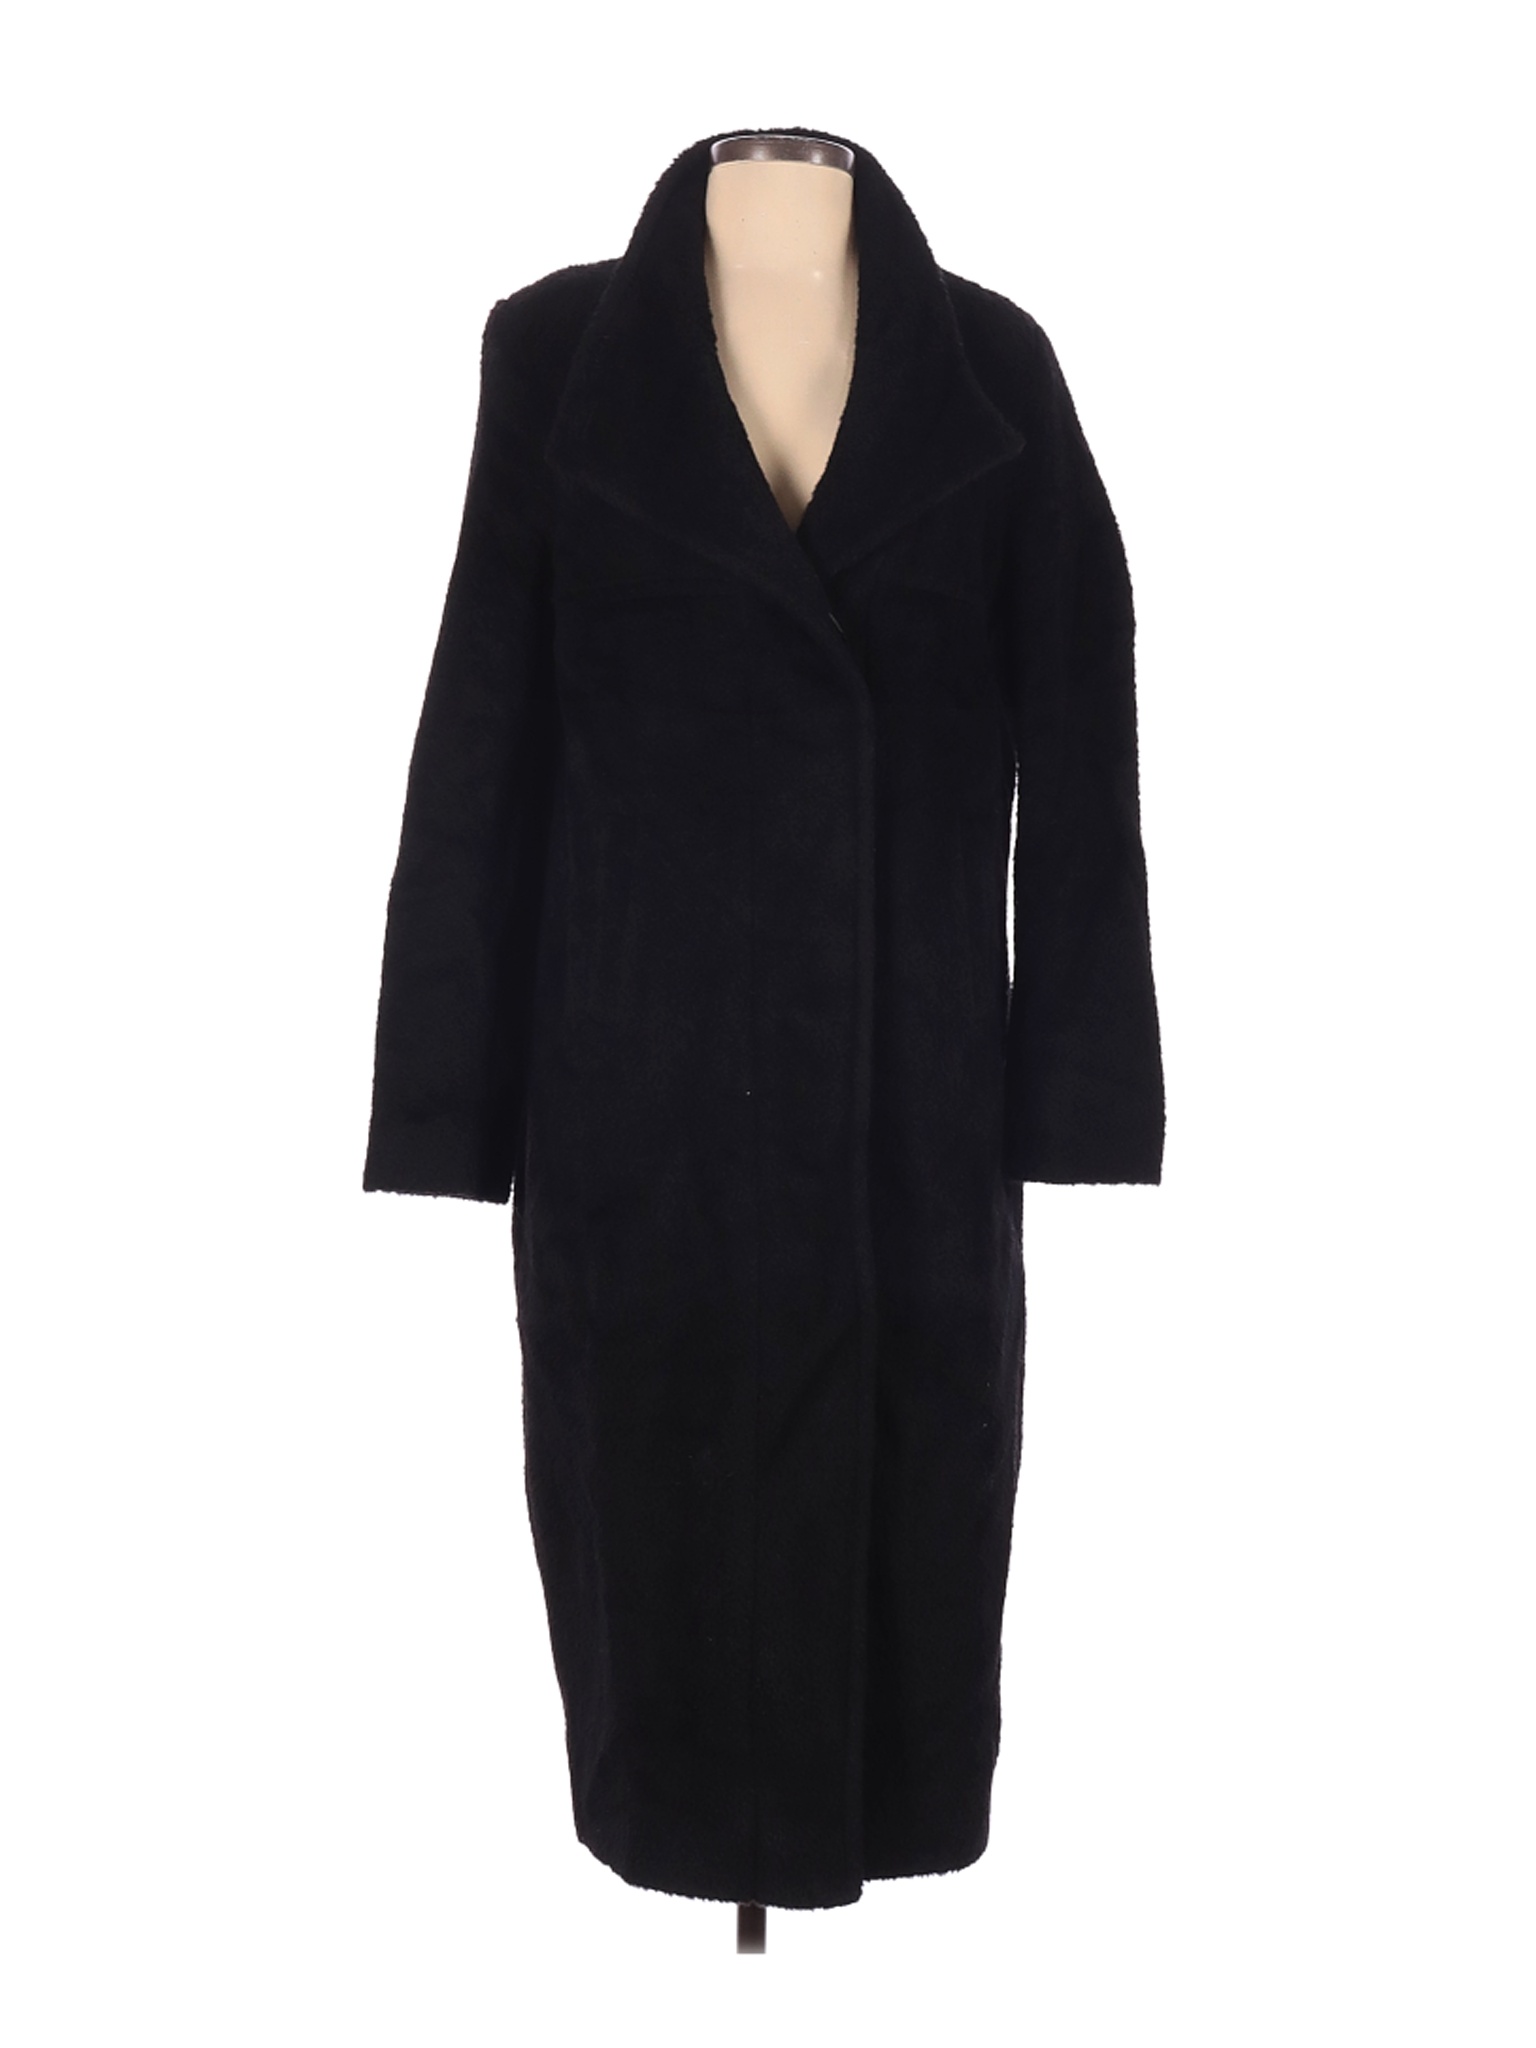 Jones New York Women Black Wool Coat XS | eBay